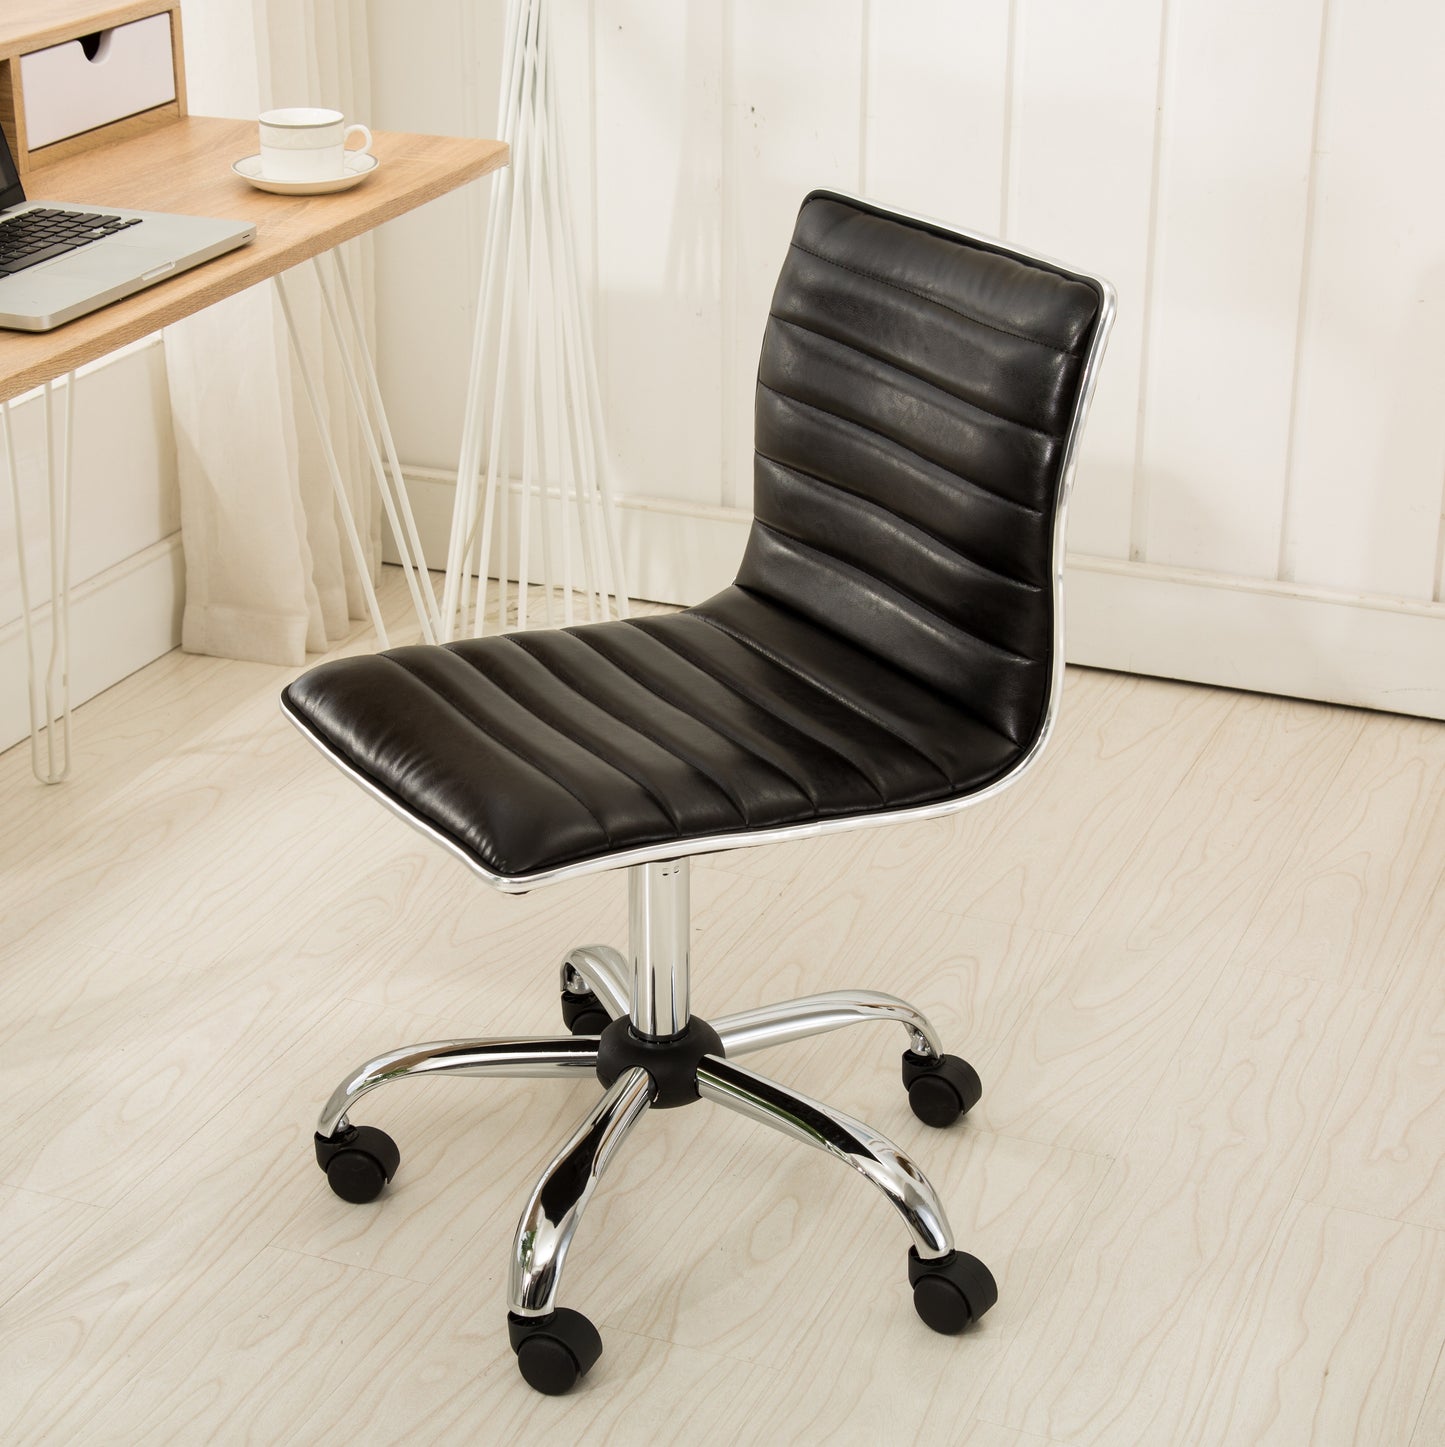 Fremo Chromel Adjustable Air Lift Office Chair in Black